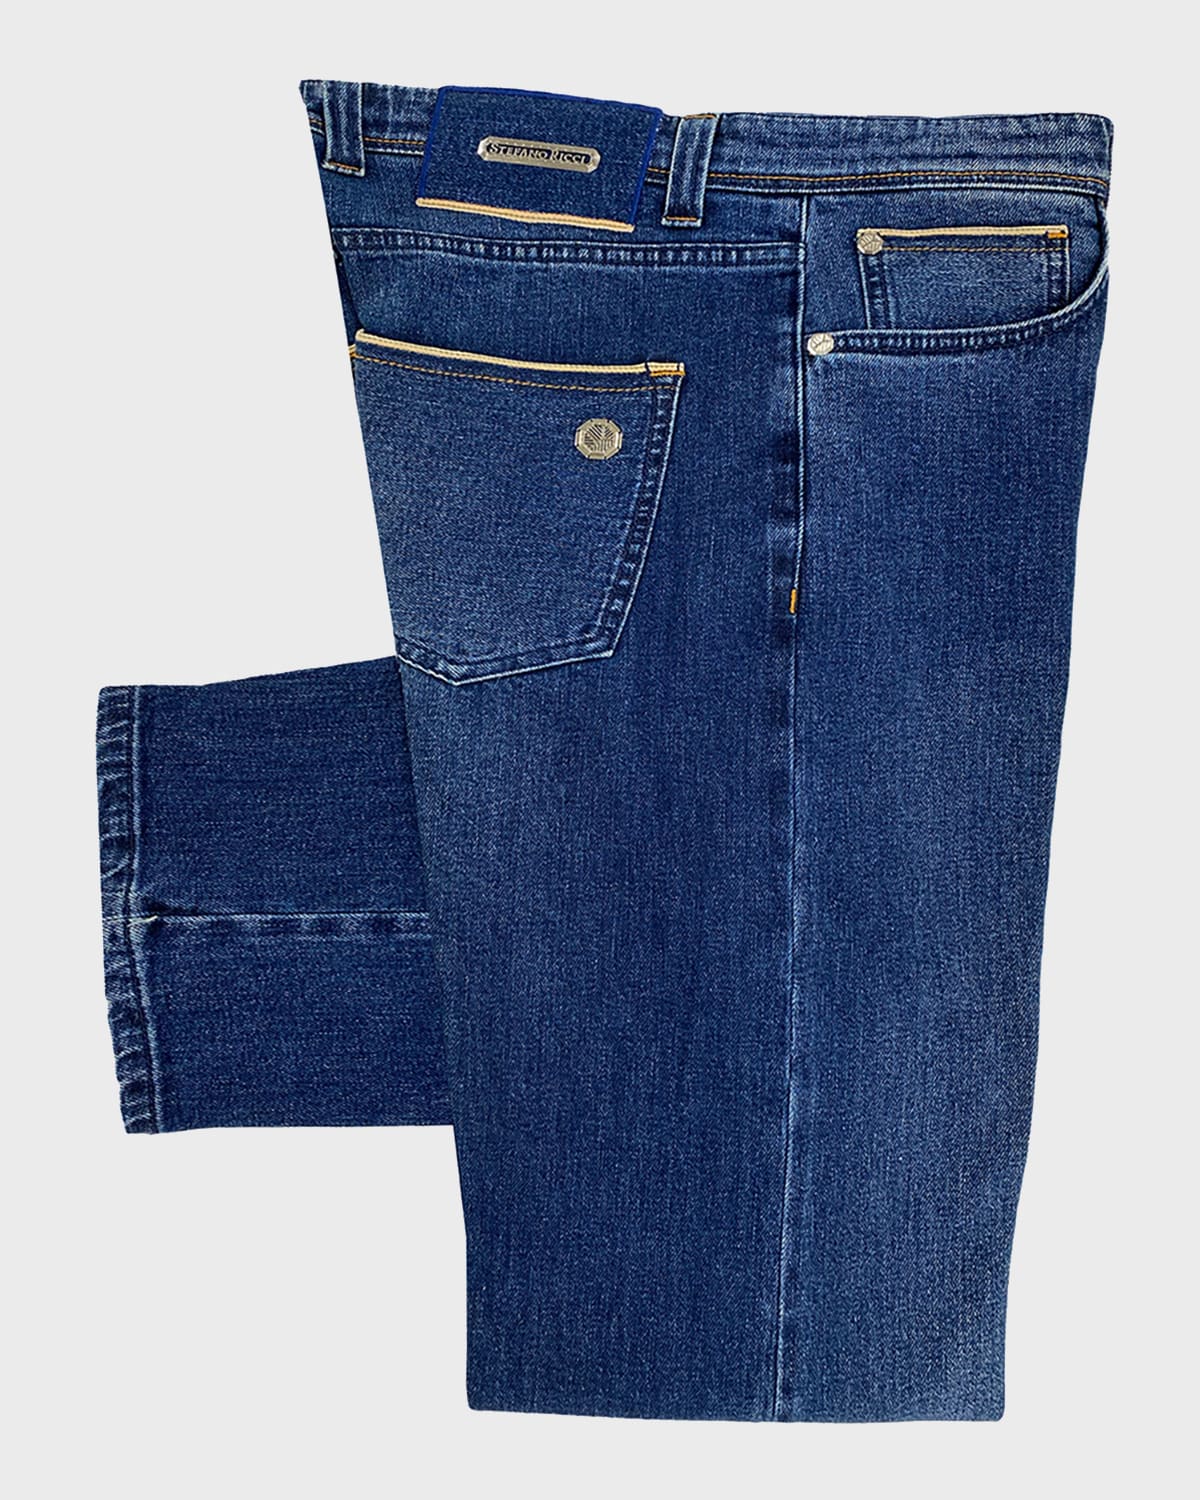 Men's Medium-Wash Jeans w/ Contrast Trim